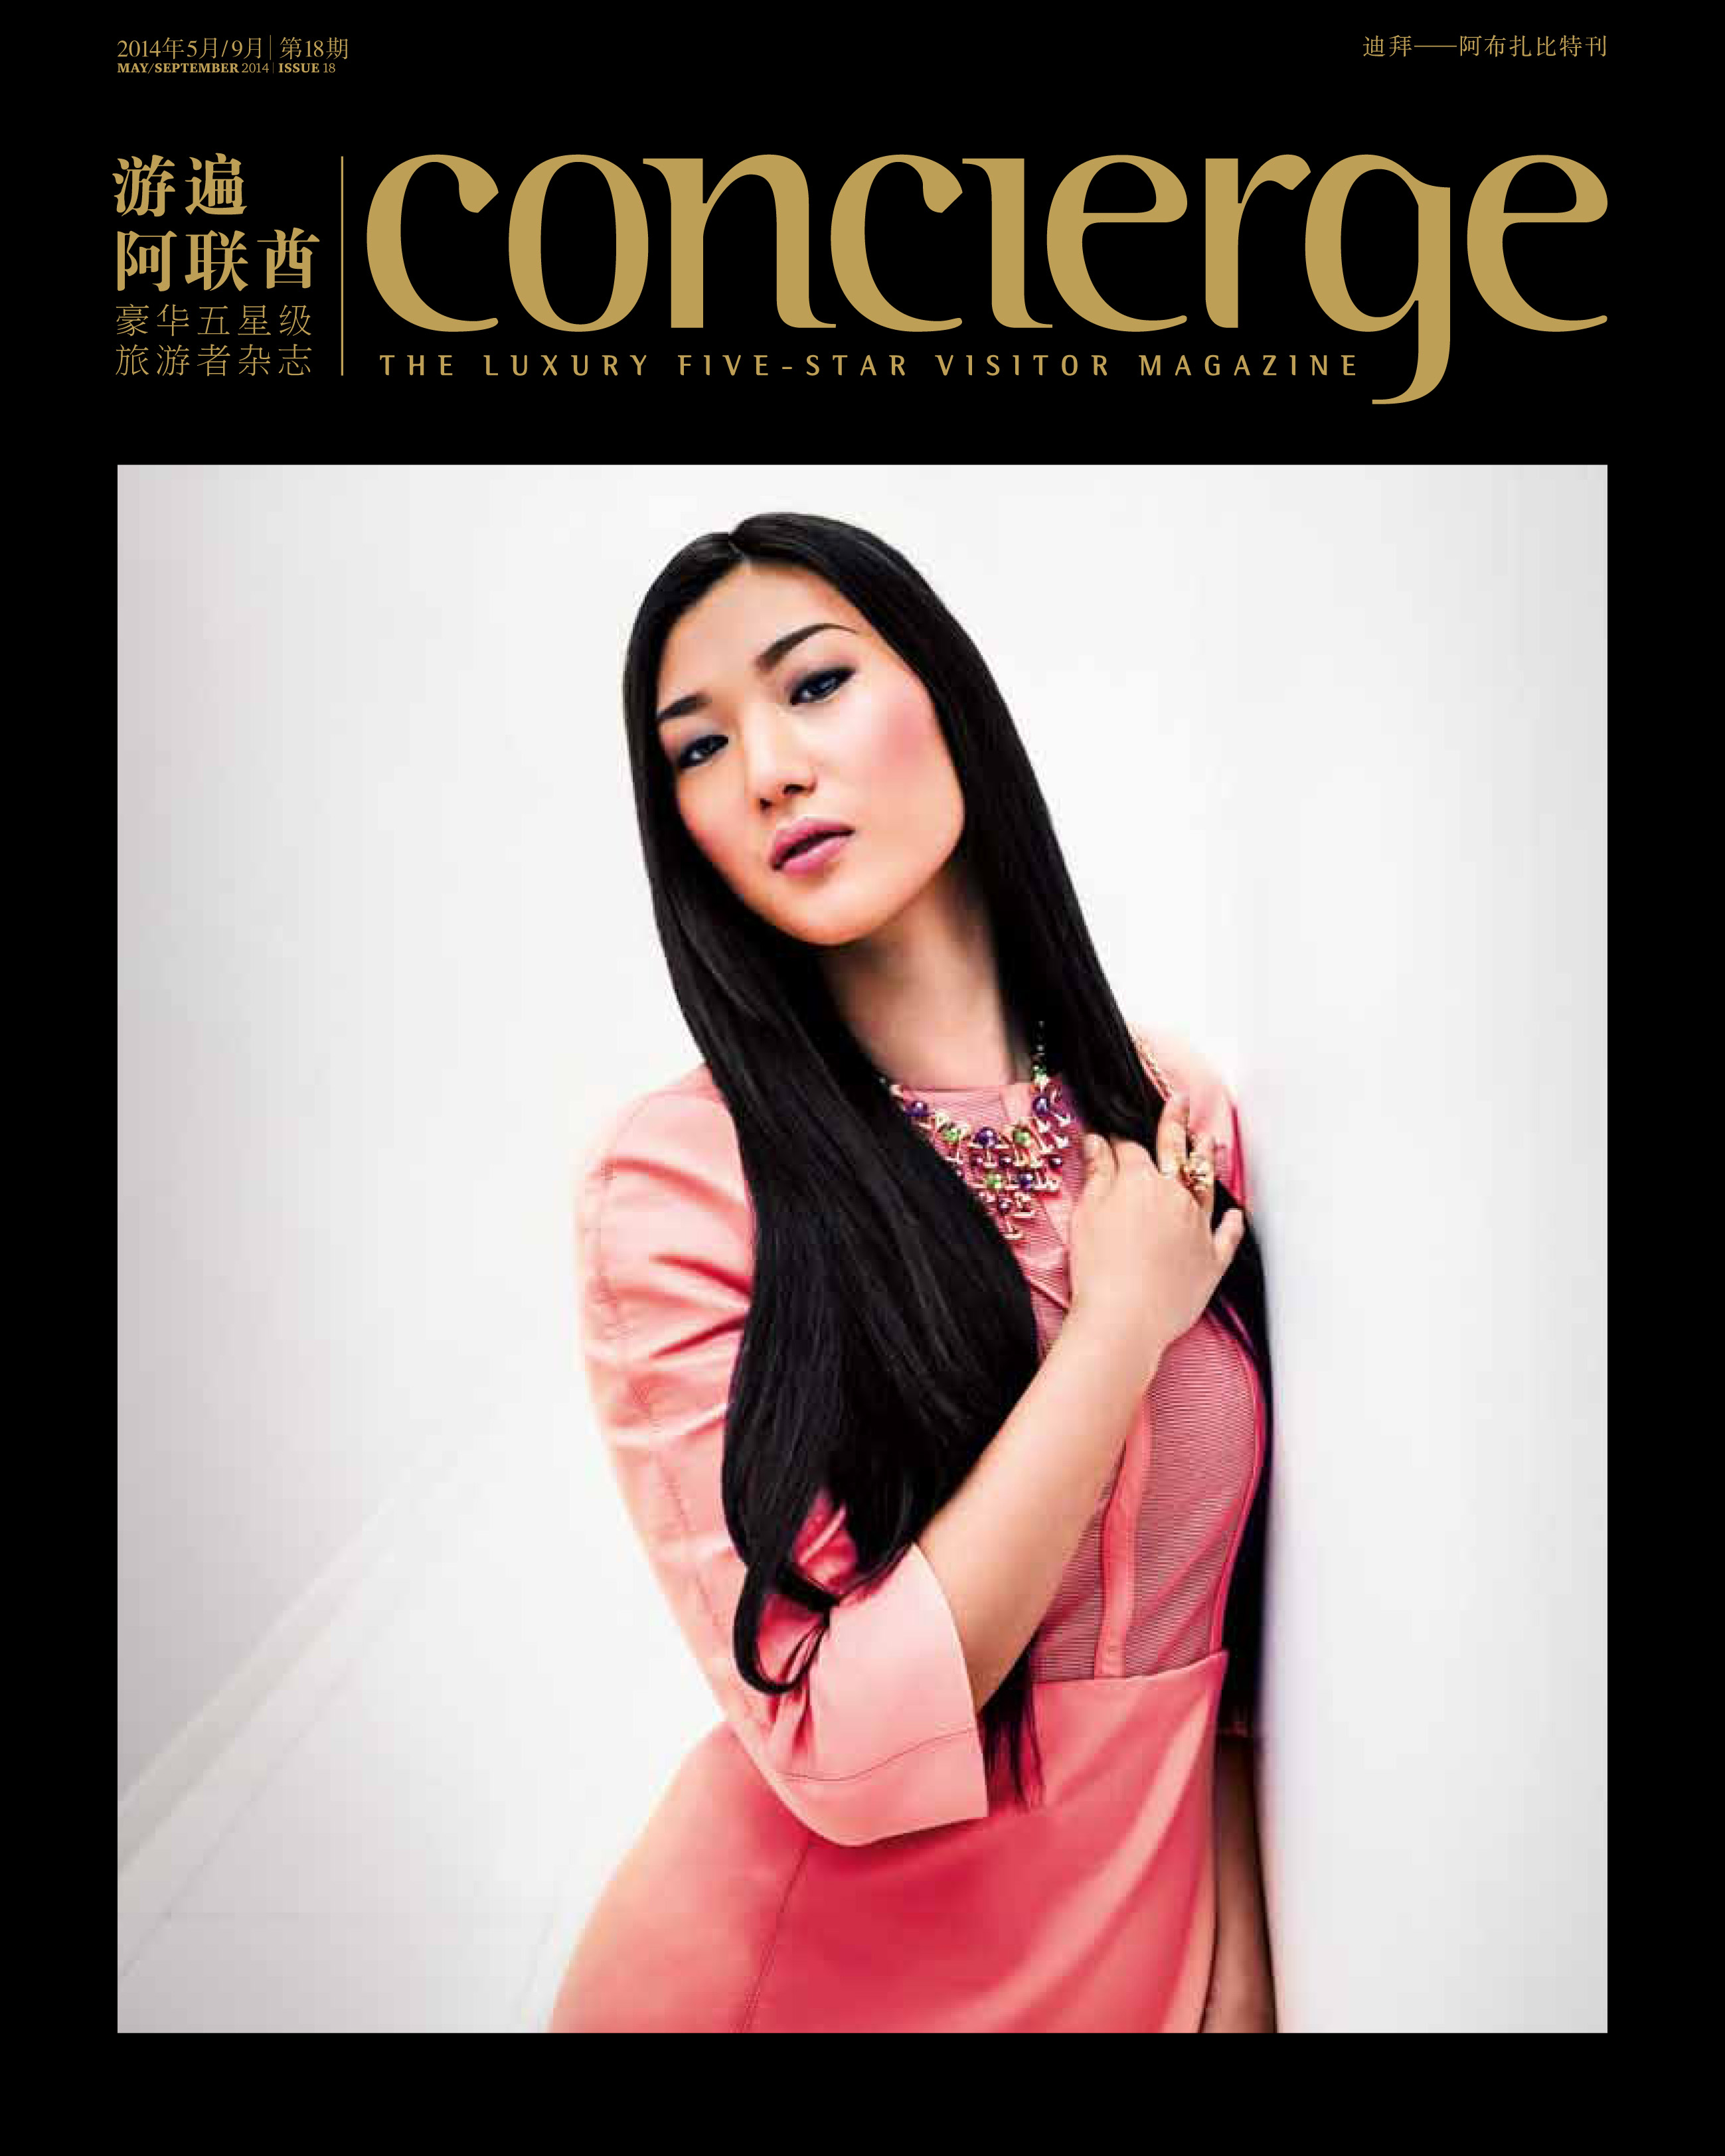 FLC Models & Talents - Catalogue Shoots - Concierge magazine - Liyo